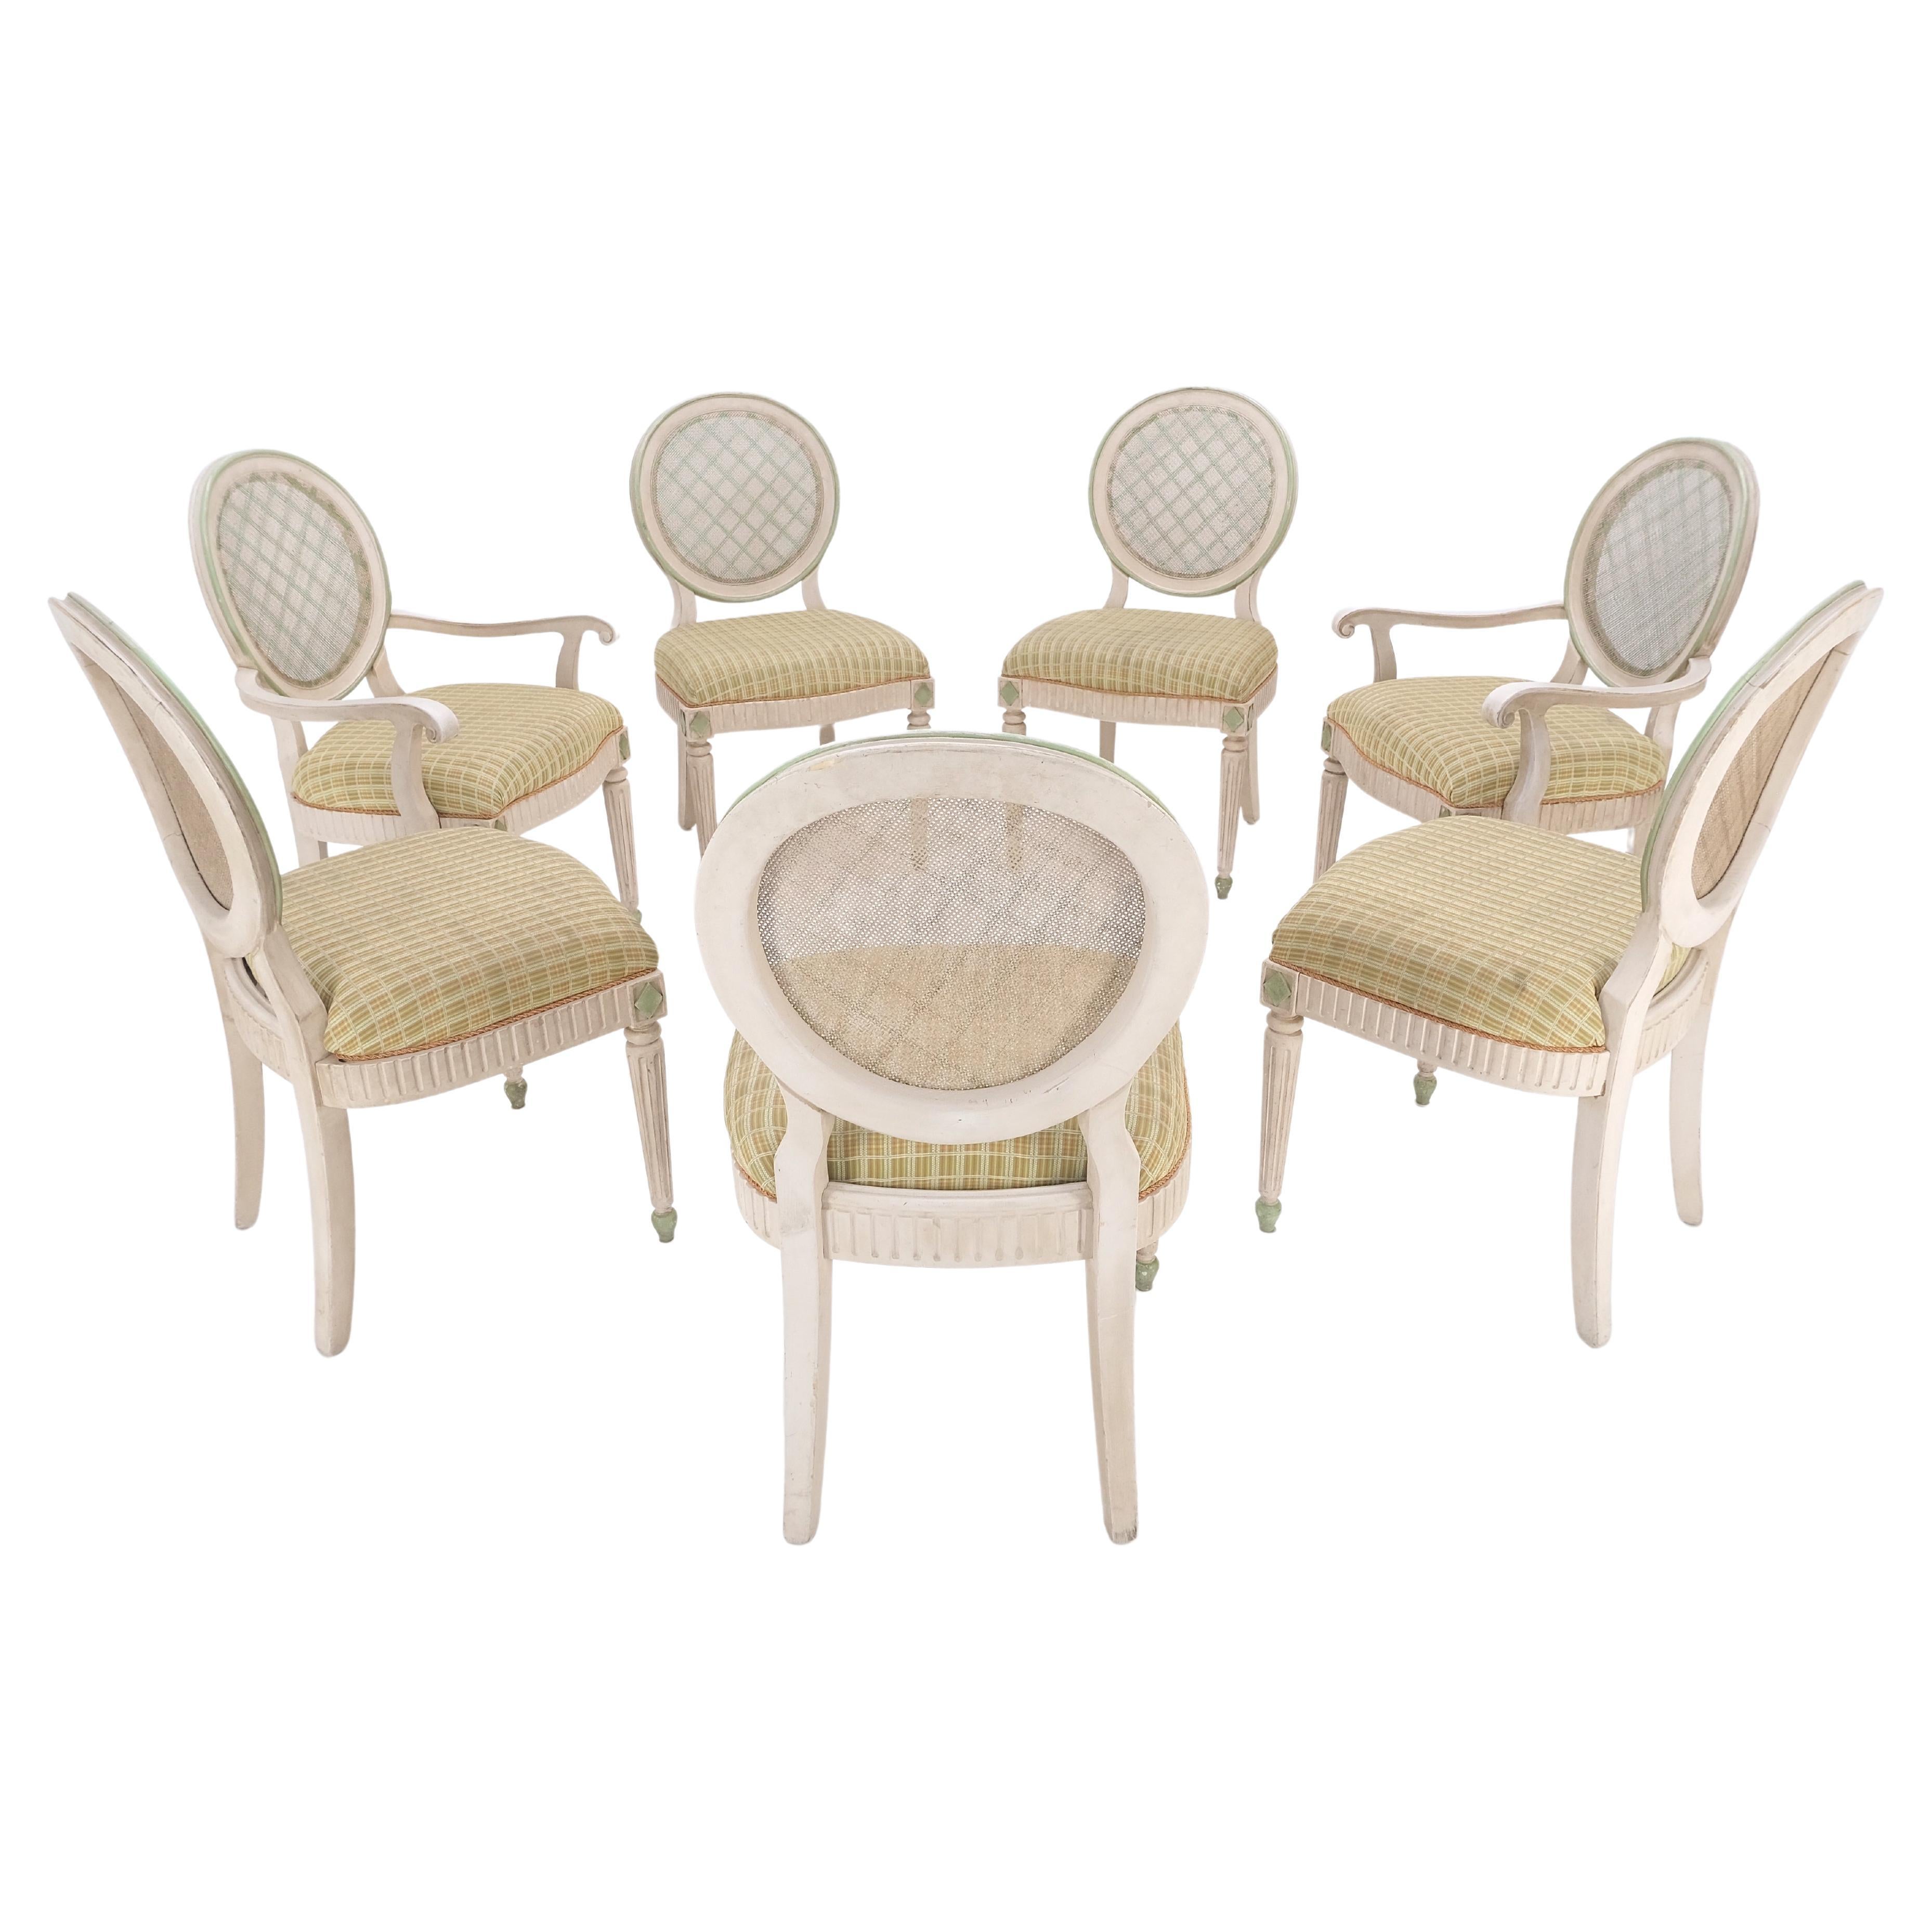 Set of 7 Swedish White Wash Paint Decorated Oval Cane Backs Dining Chairs NICE!